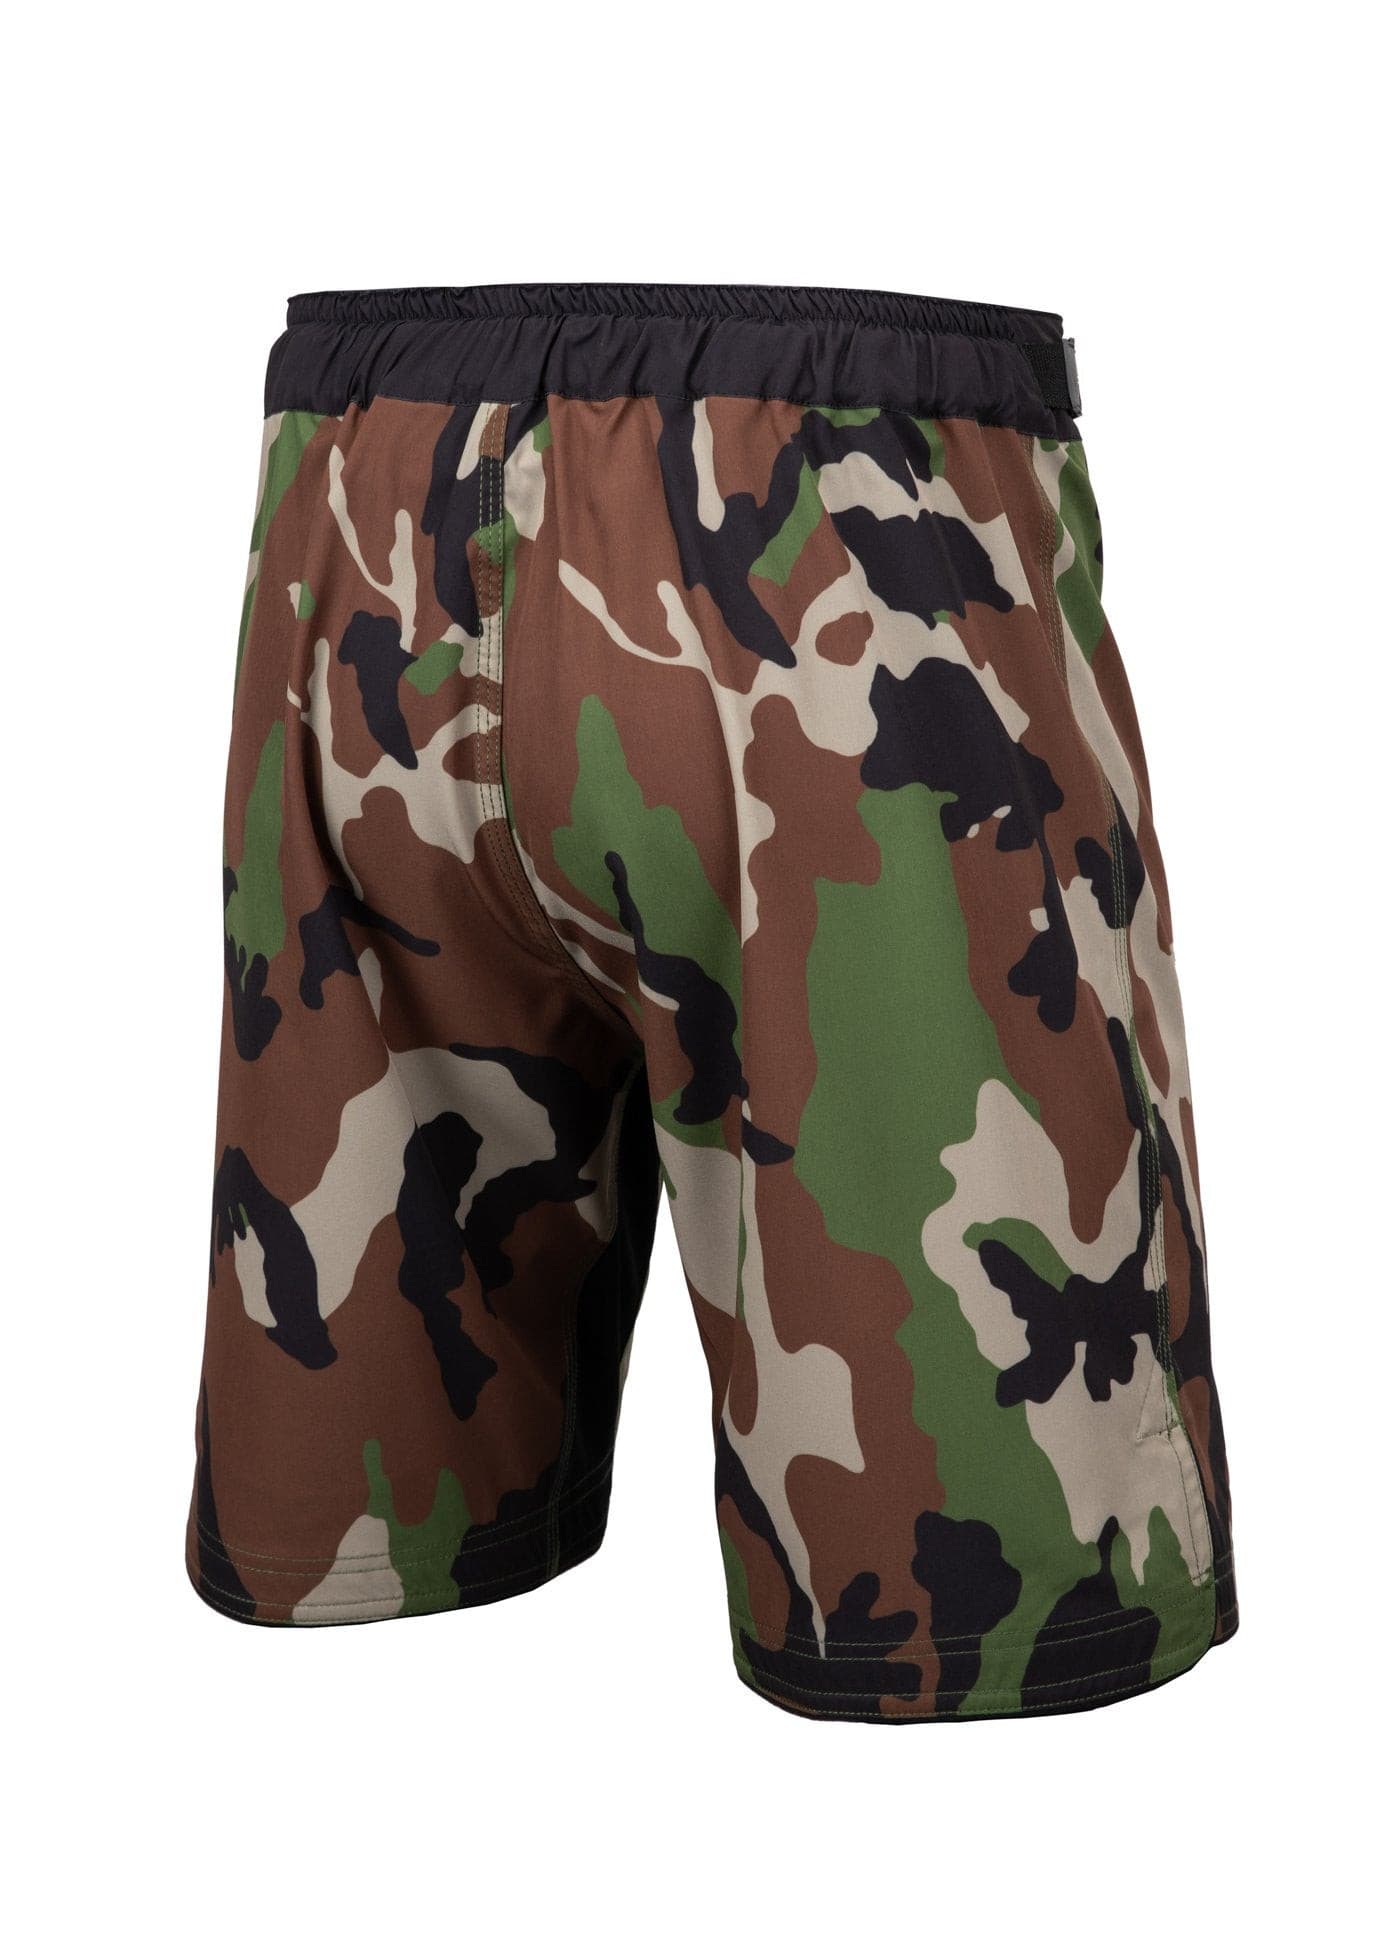 Buy PERFORMANCE 203 Woodland Camo Fight Shorts | Pitbull Store